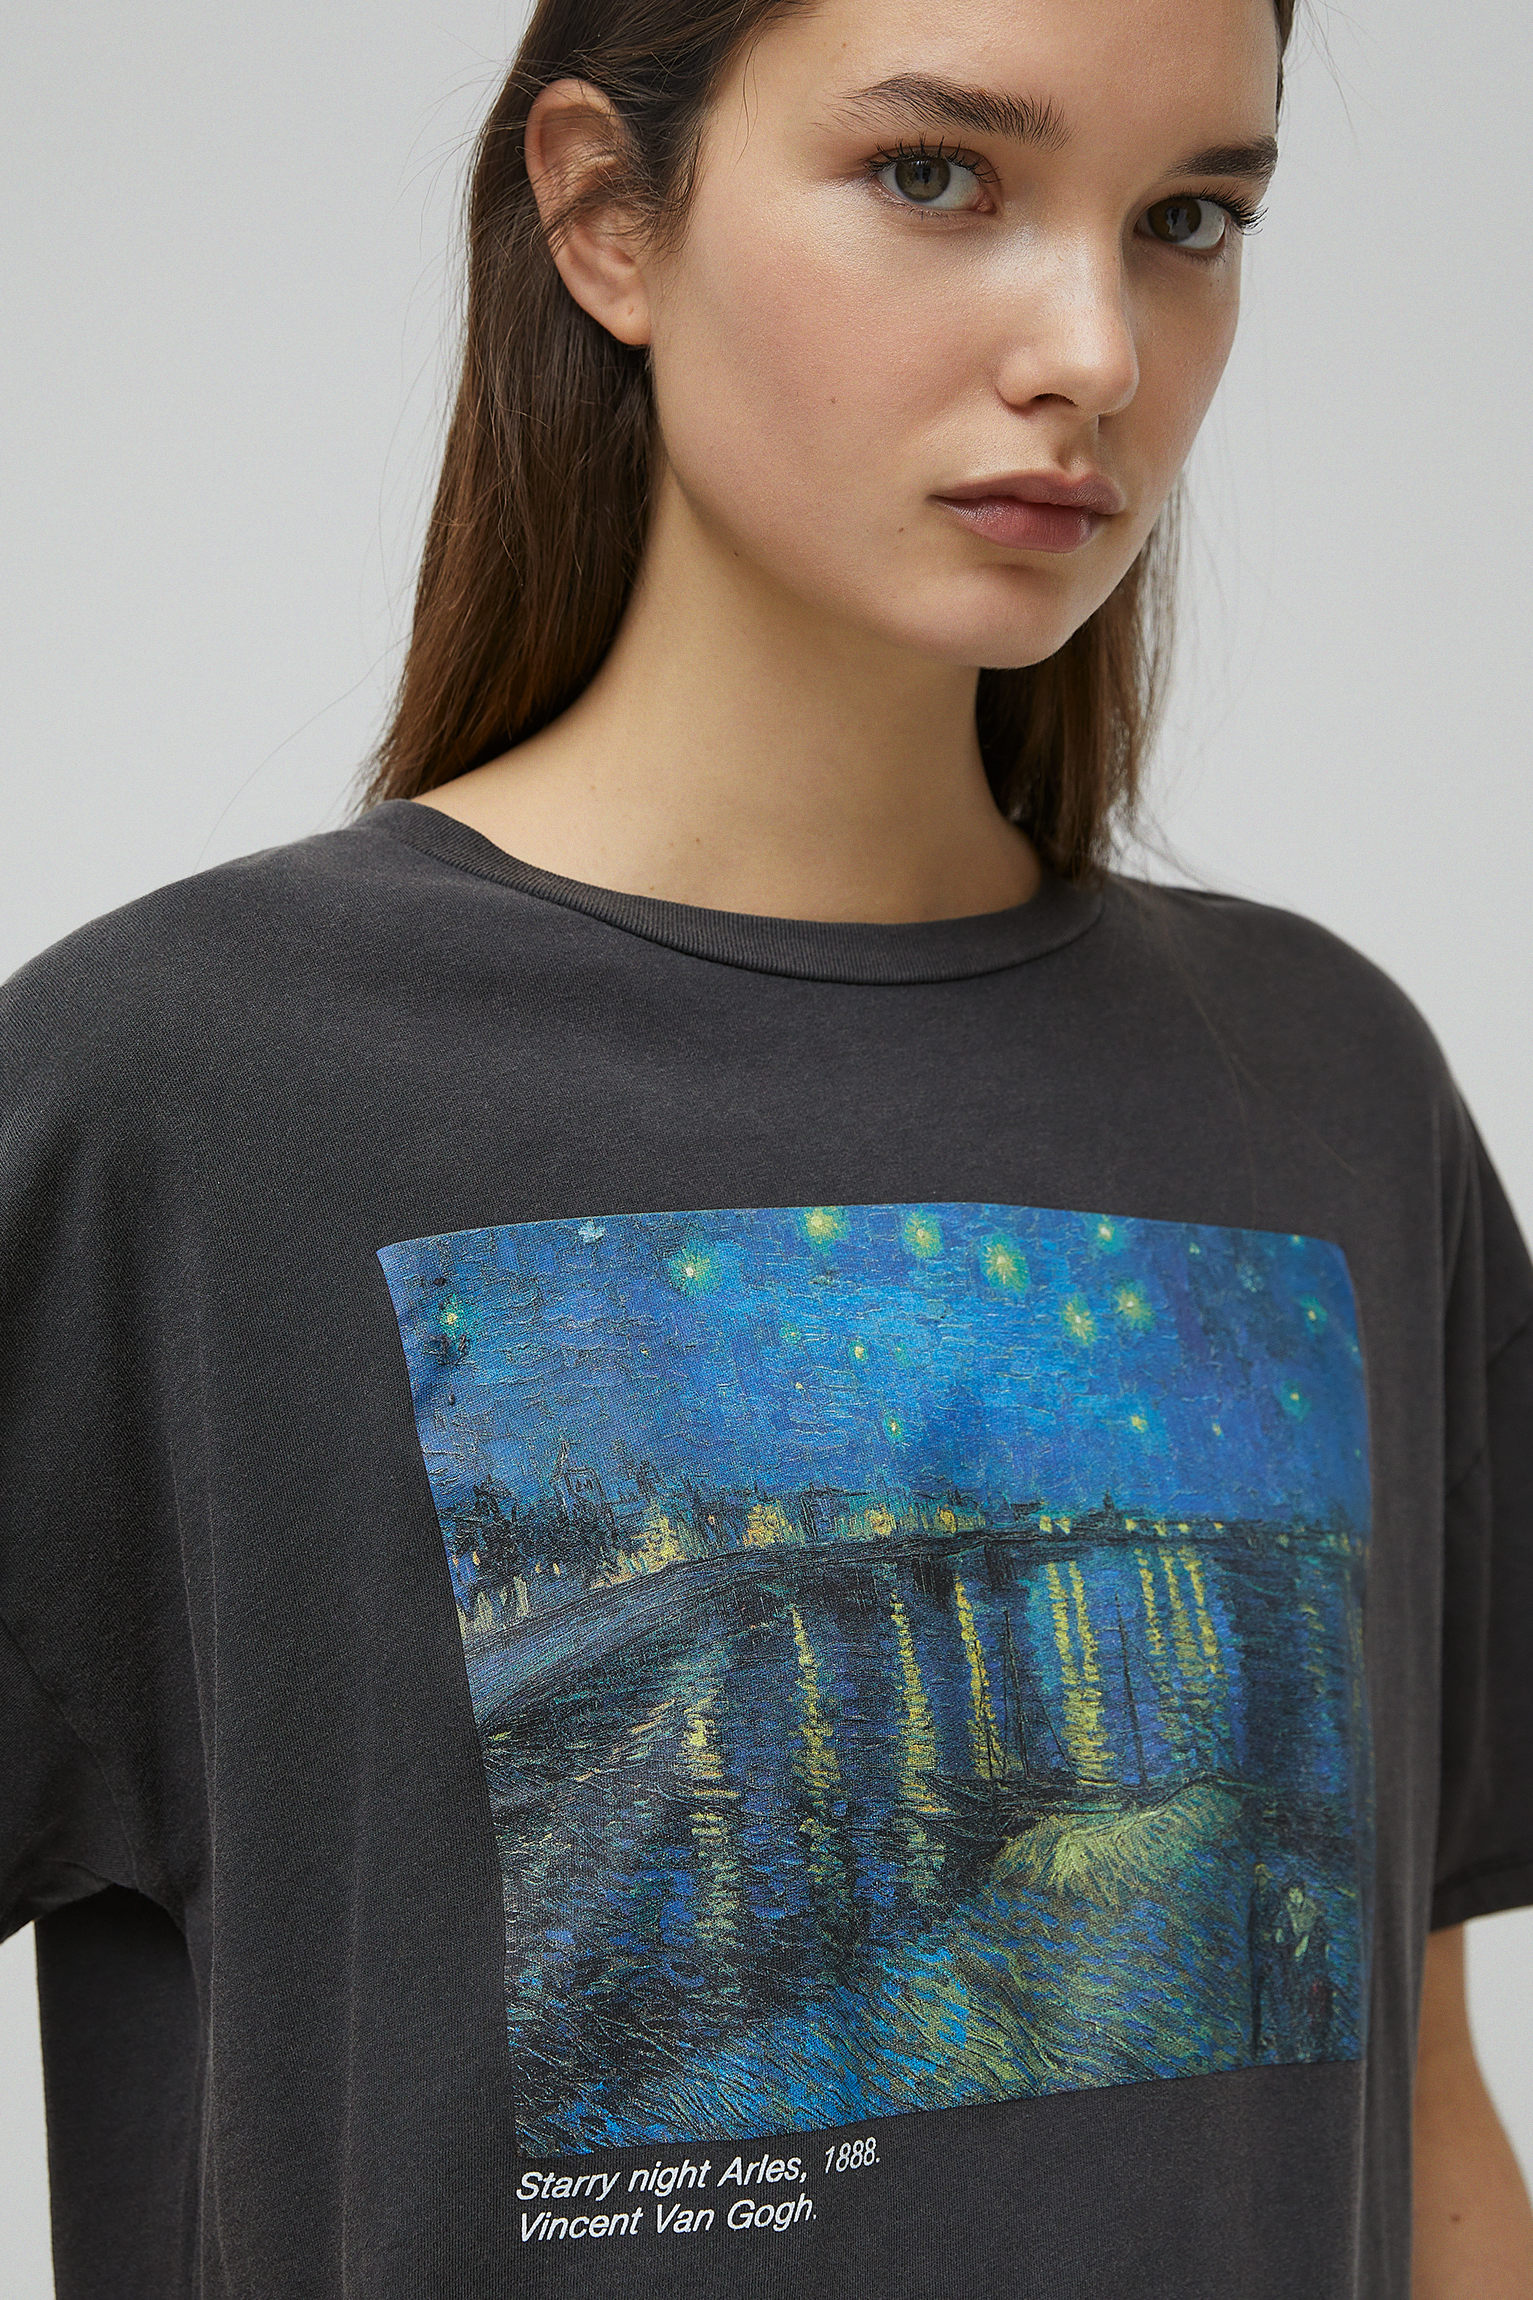 Van Gogh “Starry Night Over the Rhône 